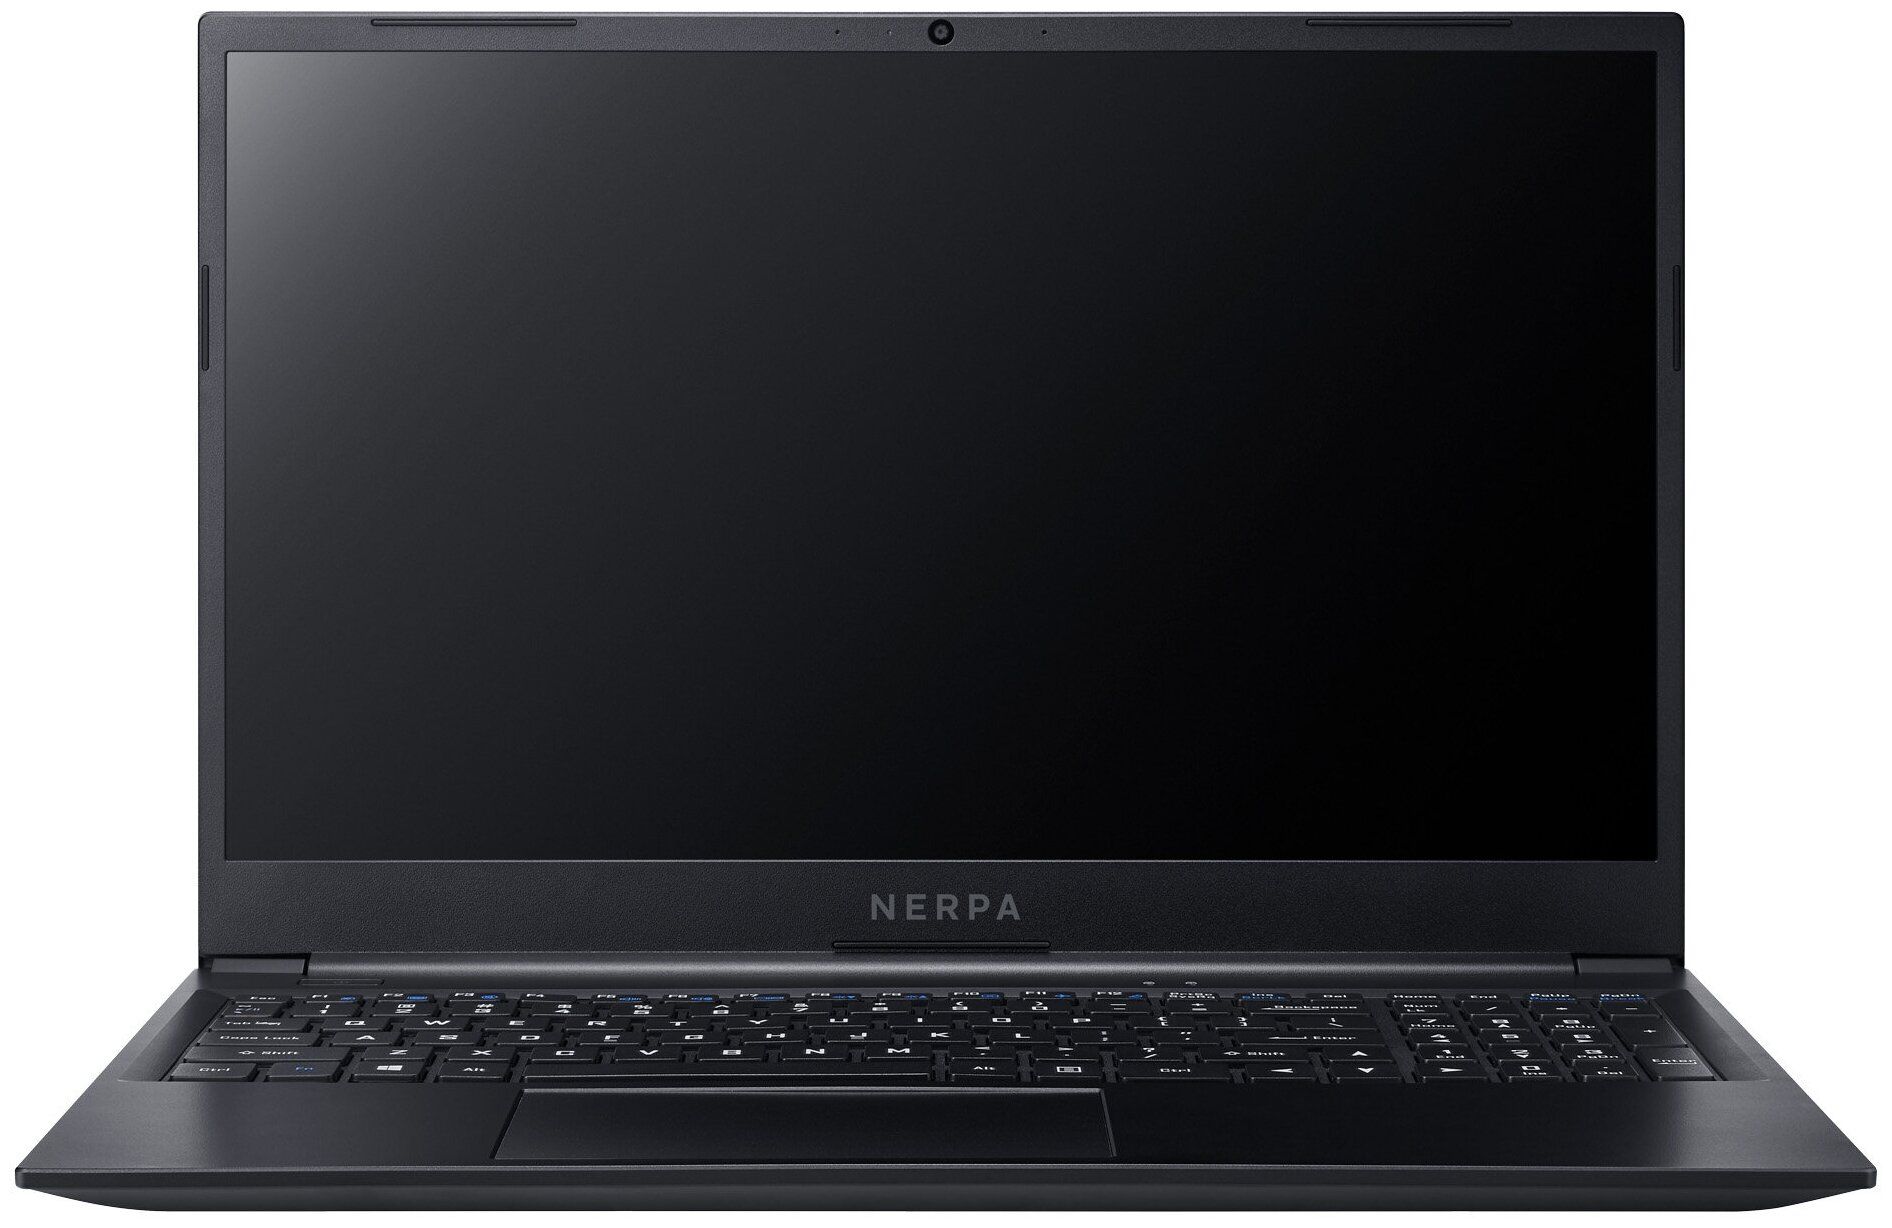 Ноутбук Nerpa Caspica A552-15 15.6 Titanium Black (A552-15AA085100K) ноутбук nerpa caspica a752 15 15 6 titanium gray titanium black a752 15ac162601g